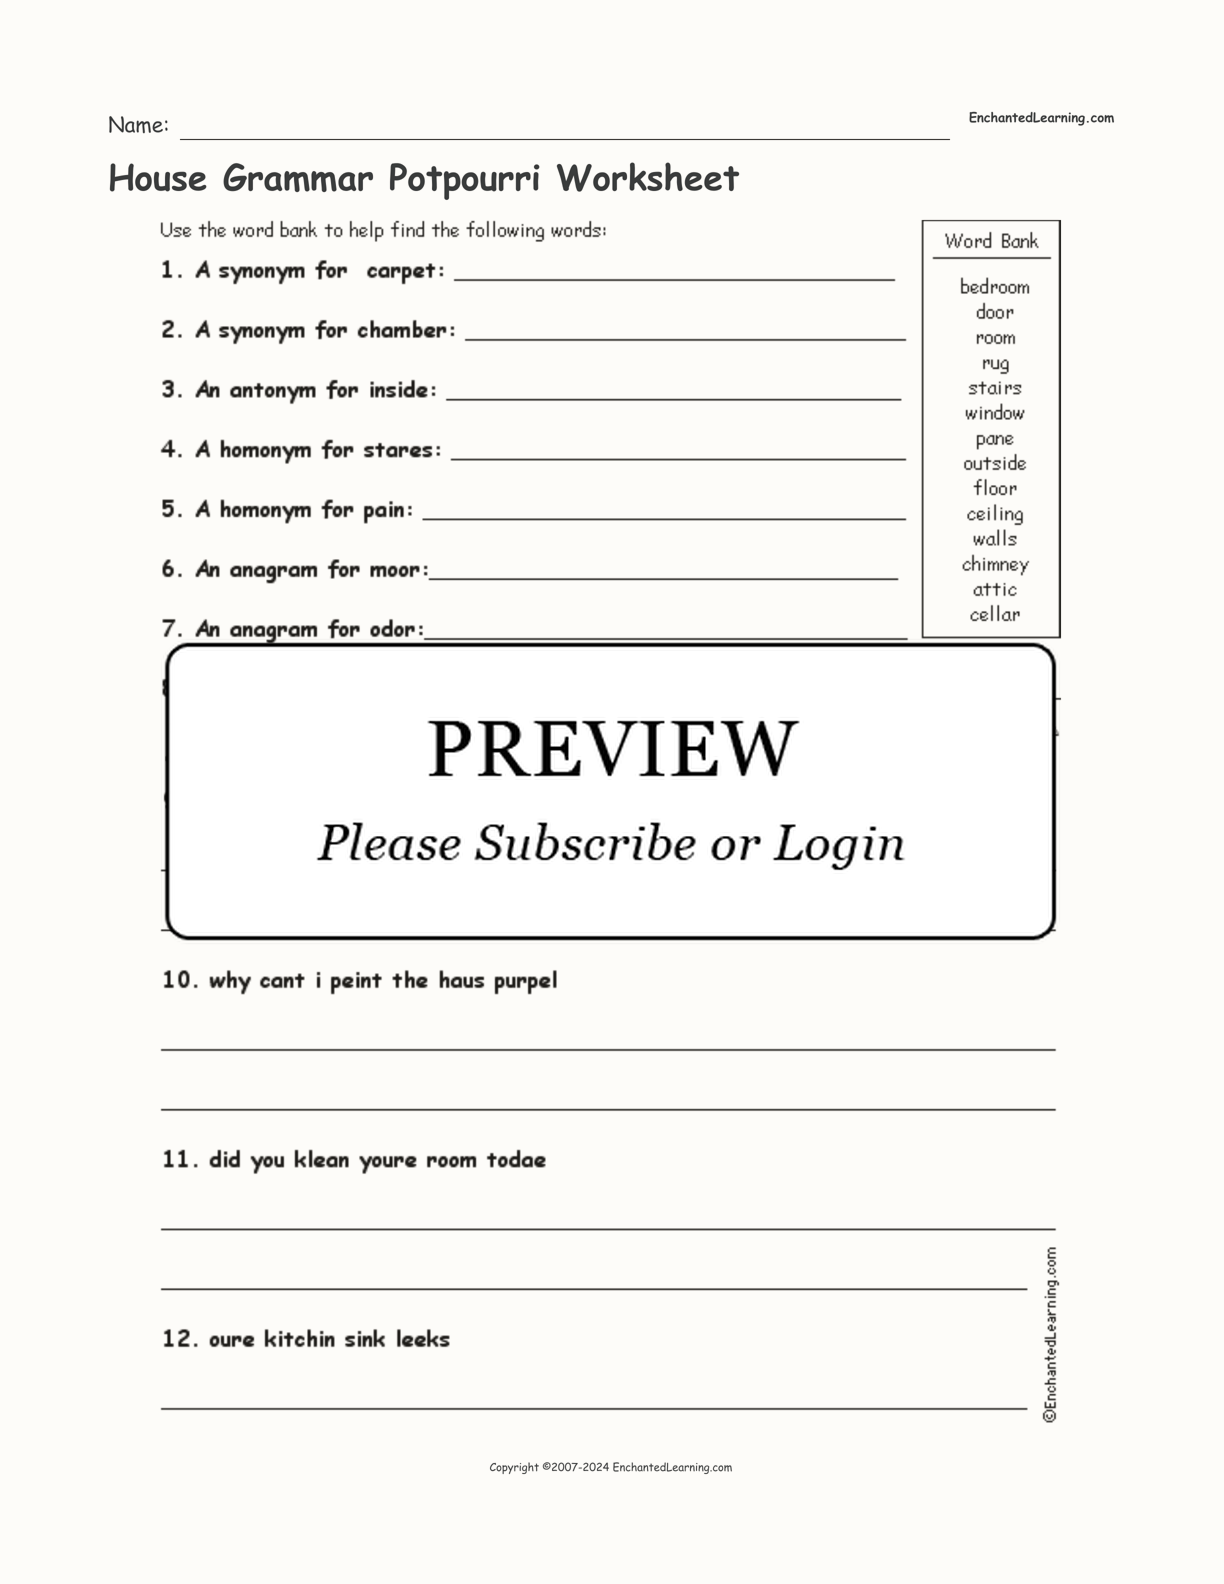 House Grammar Potpourri Worksheet interactive worksheet page 1